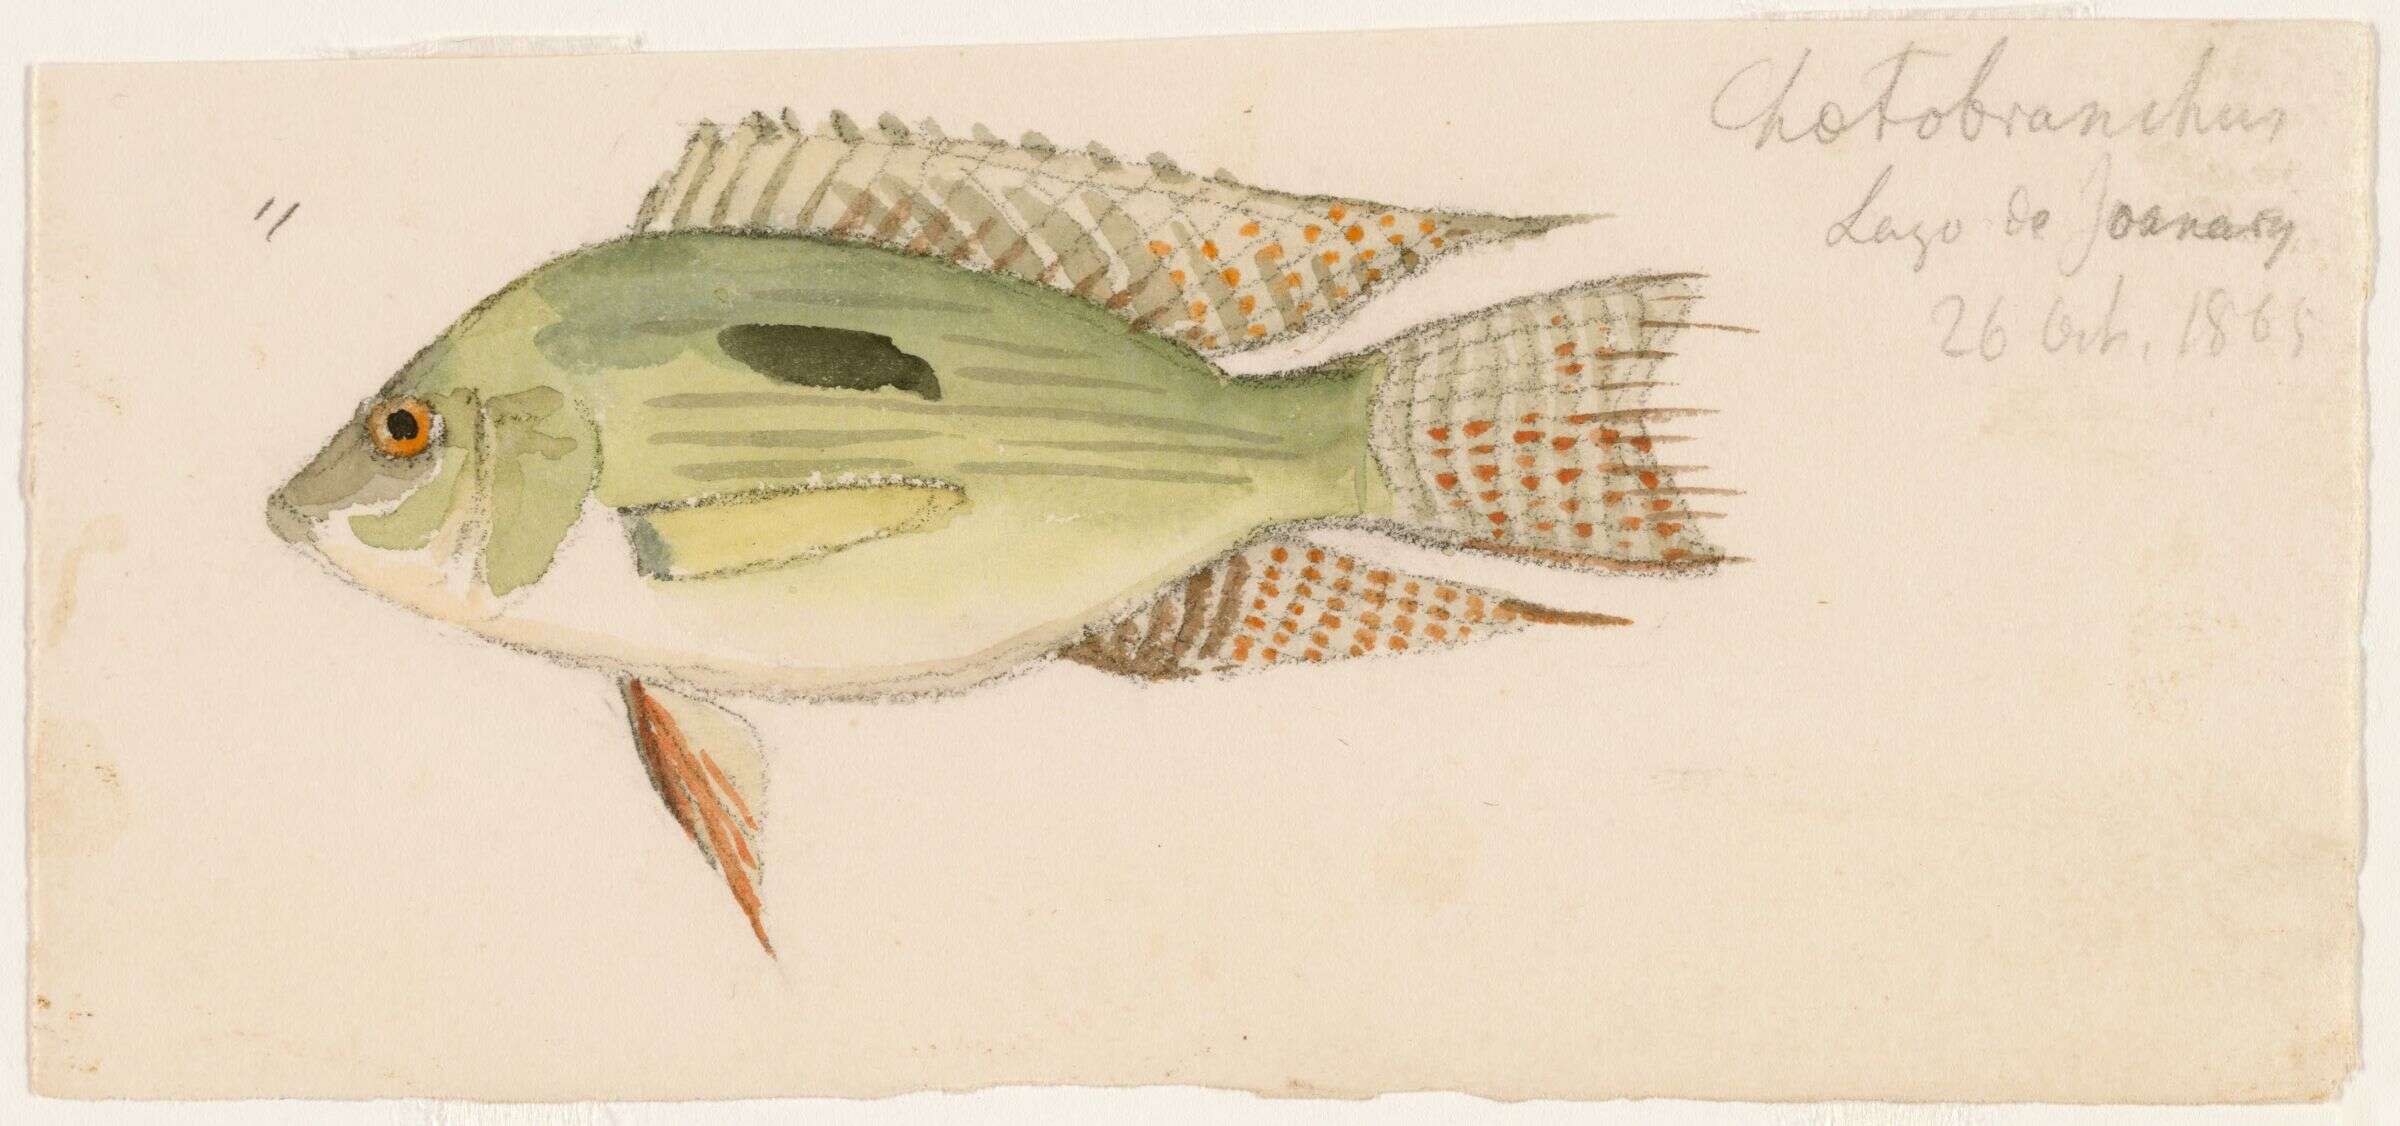 Image of Chaetobranchus